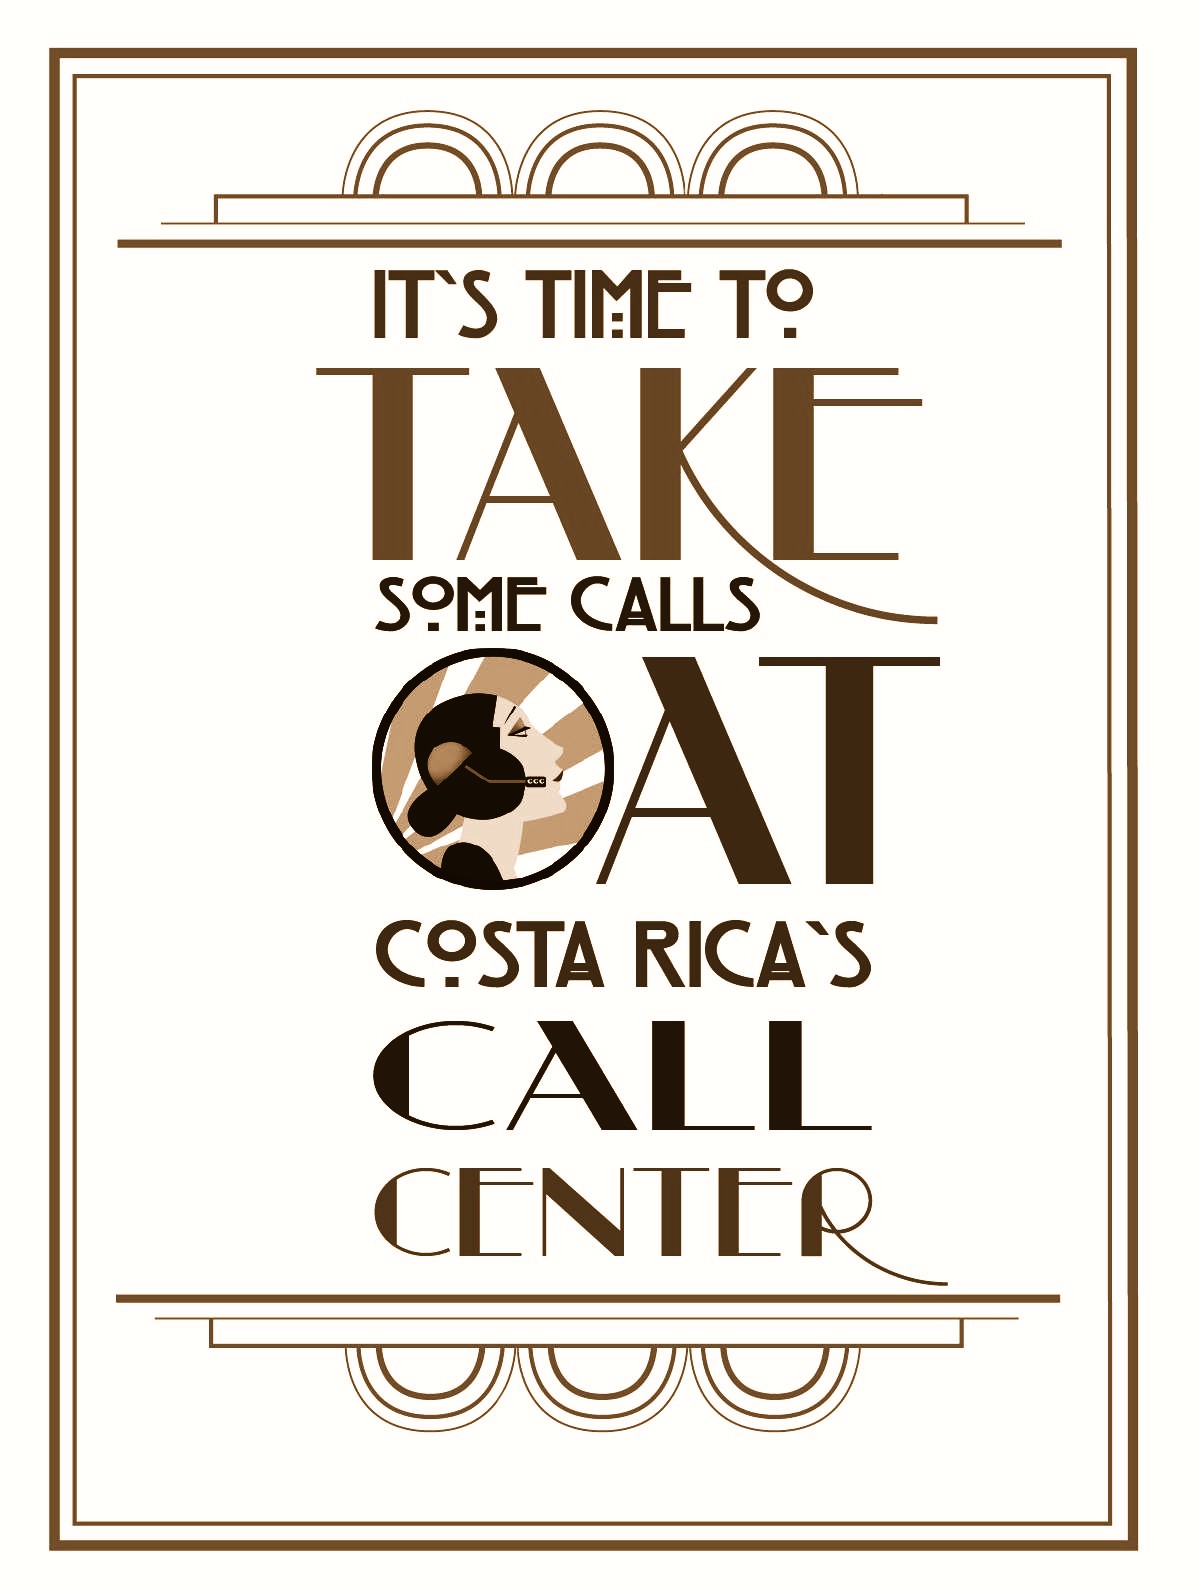 COLD CALL AND TELECALLER COSTA RICA.jpg  by richardblank